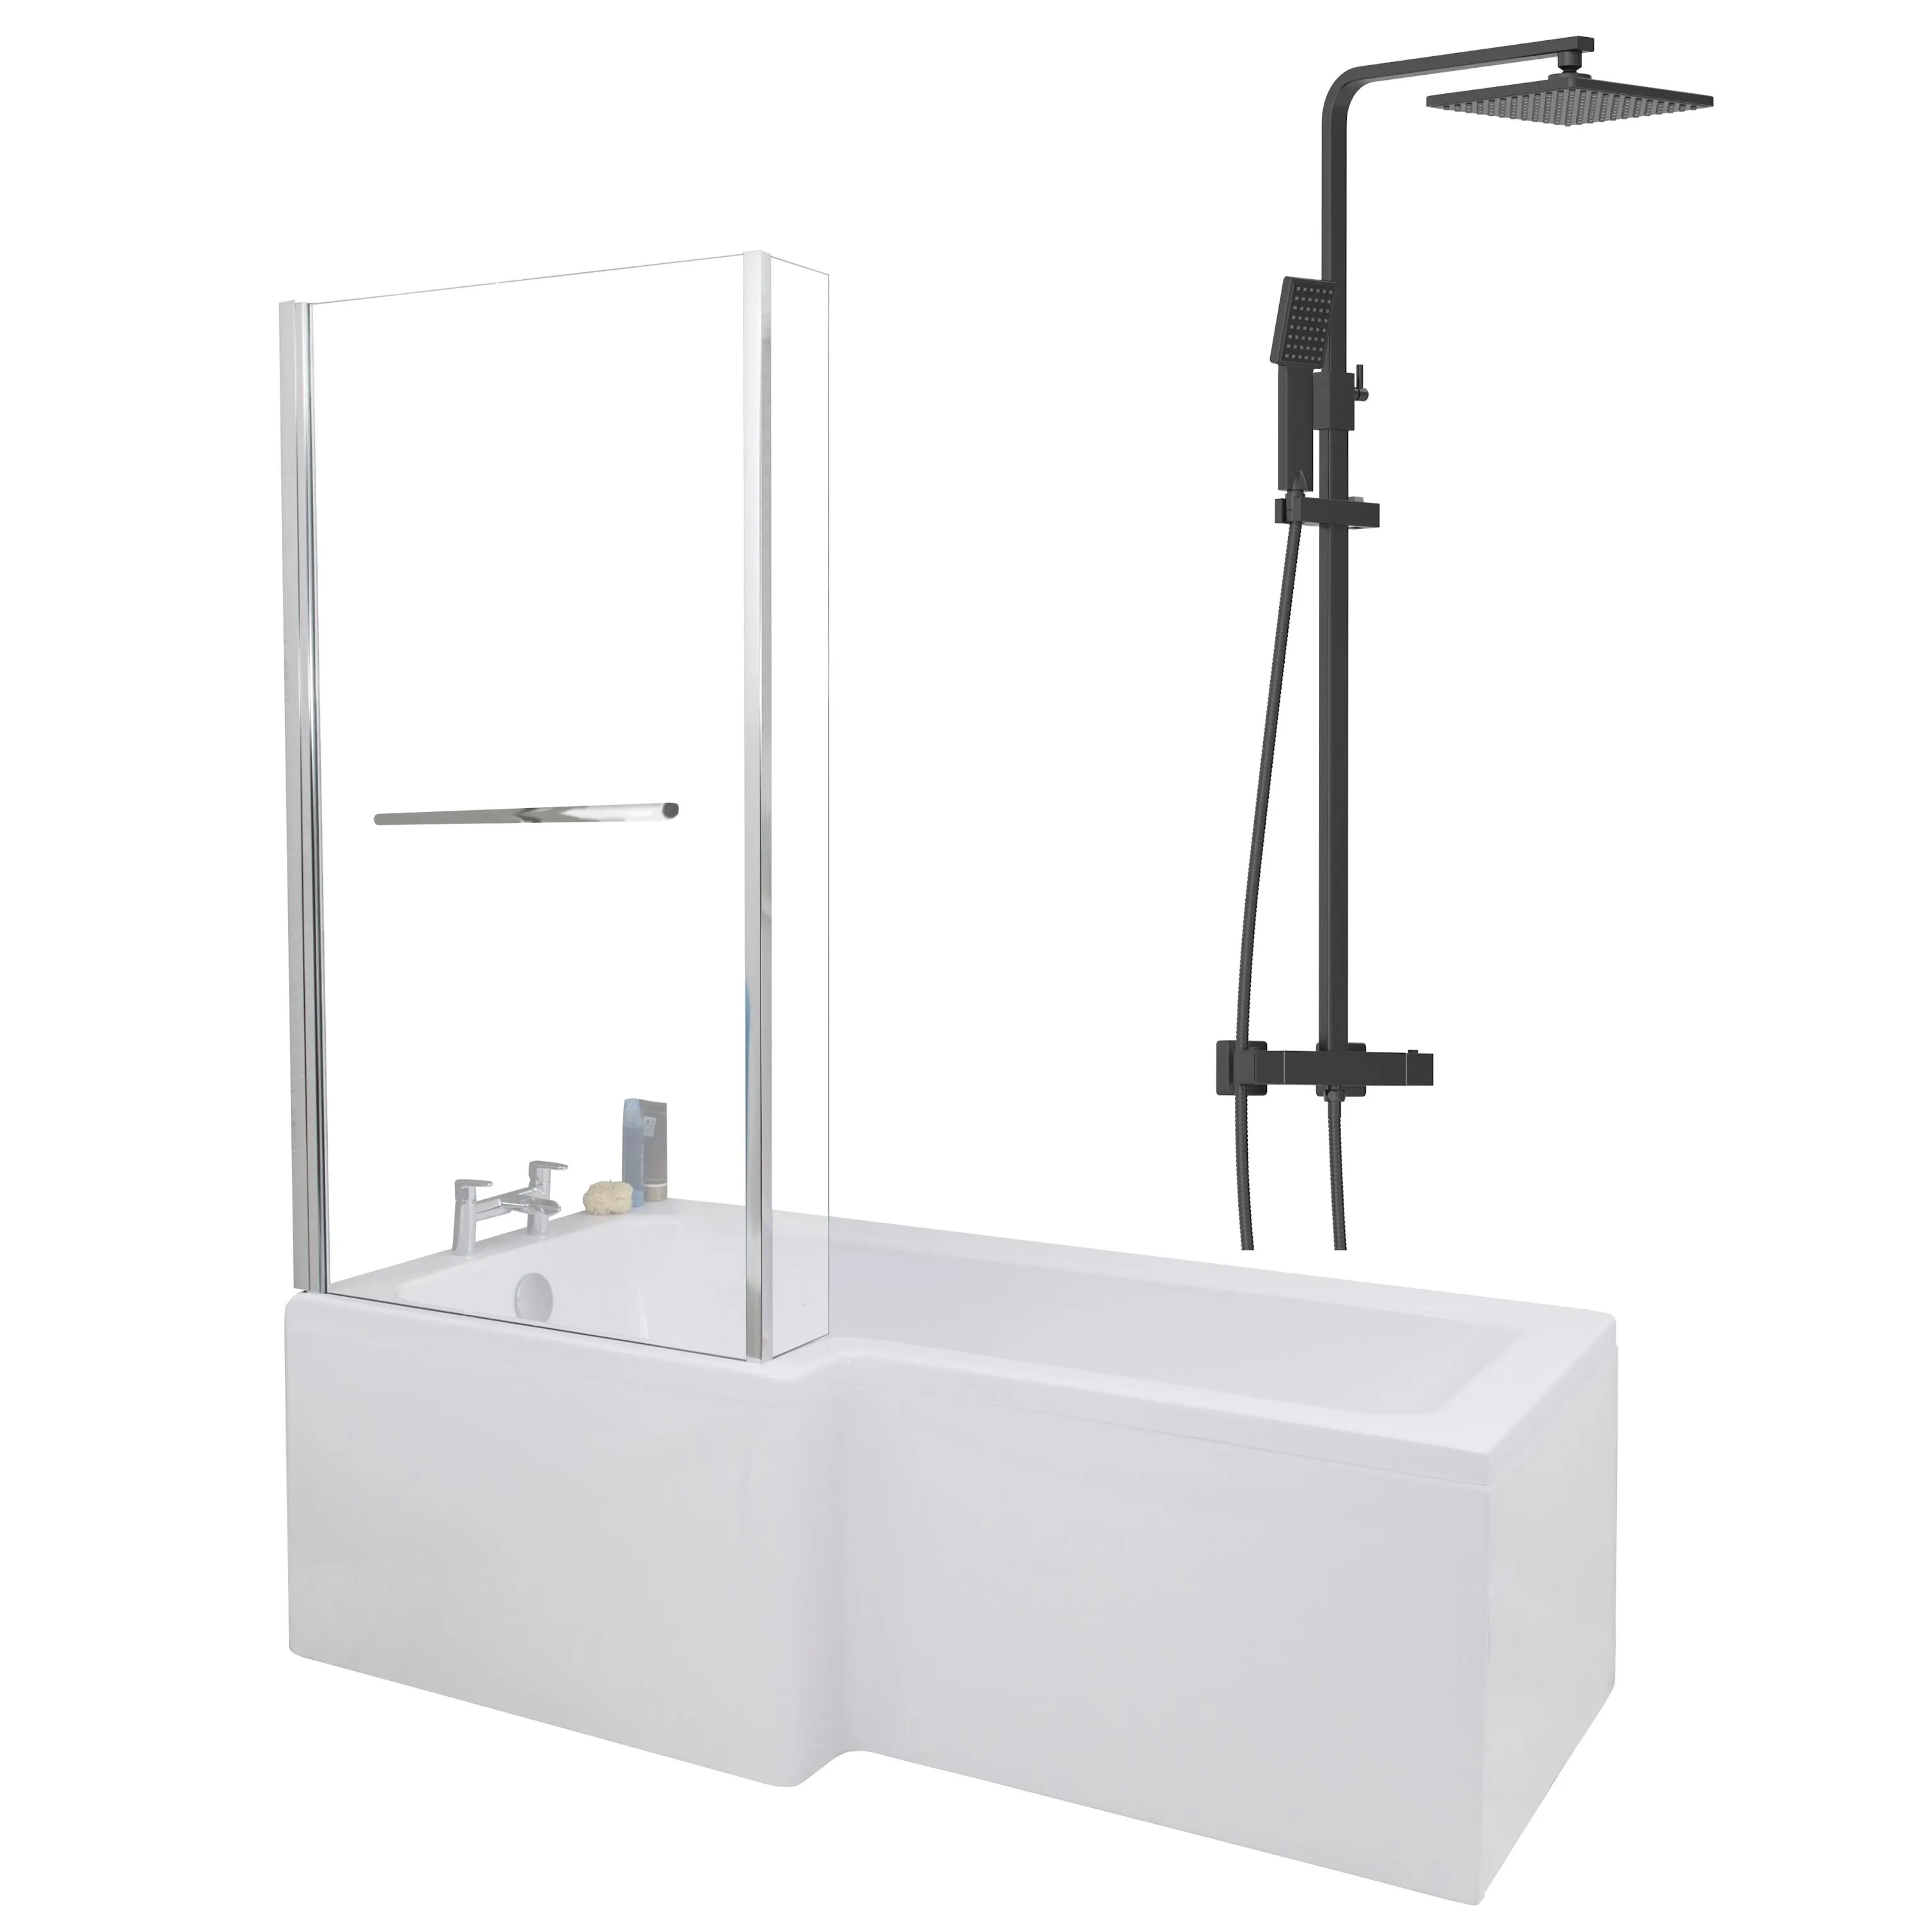 Ceramica L 1700 Left Shower Bath - Screen With Rail, Black Square Mixer Shower & Side Panel